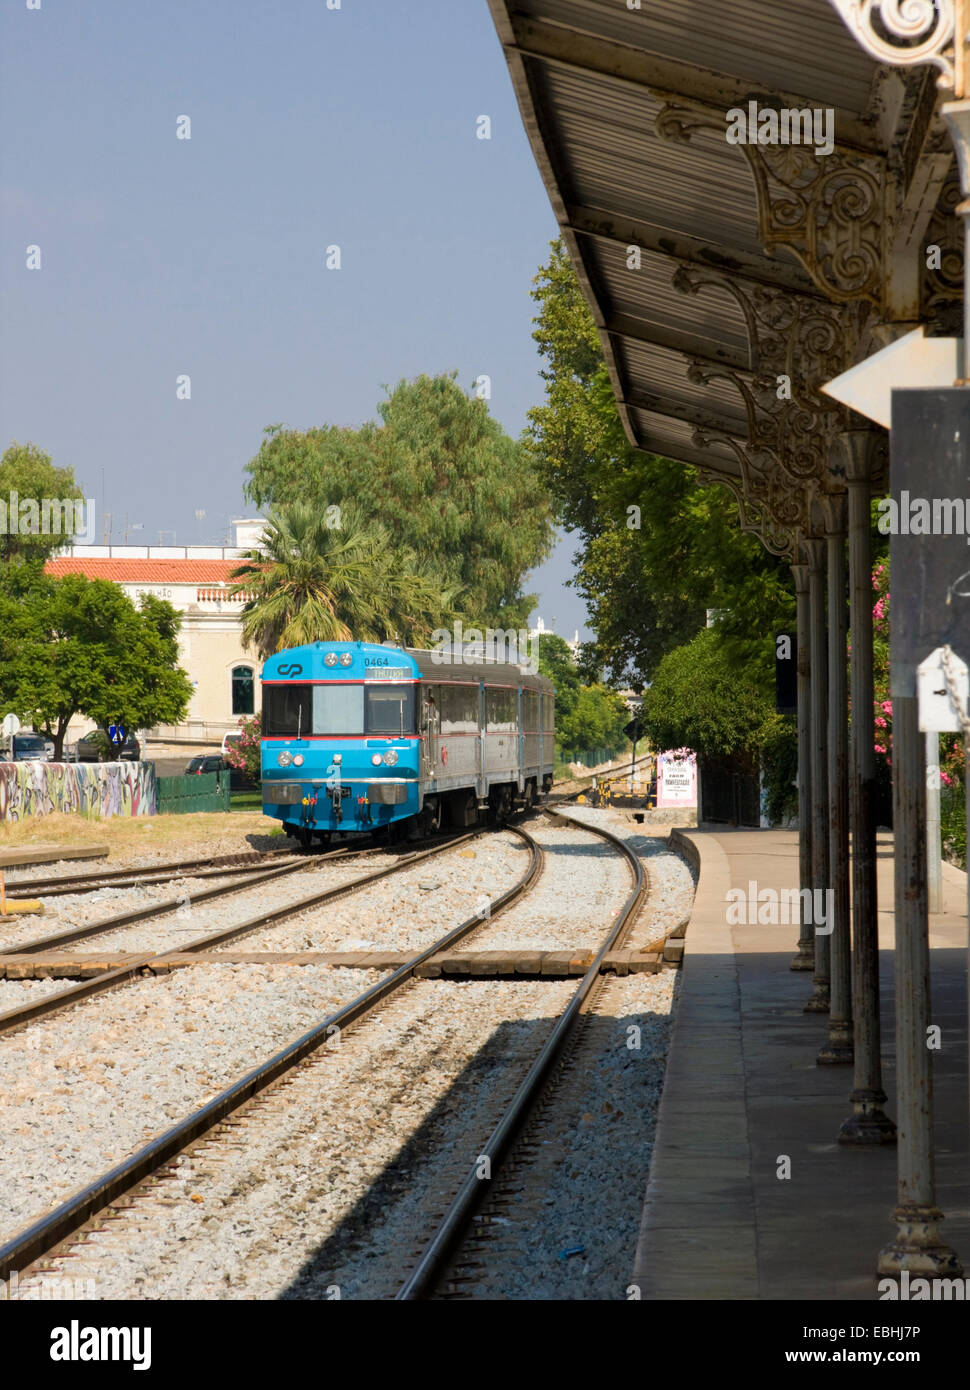 Estacao de Comboio (Railway Station), Olhao, Algarve, Portugal, September 2013 Stock Photo